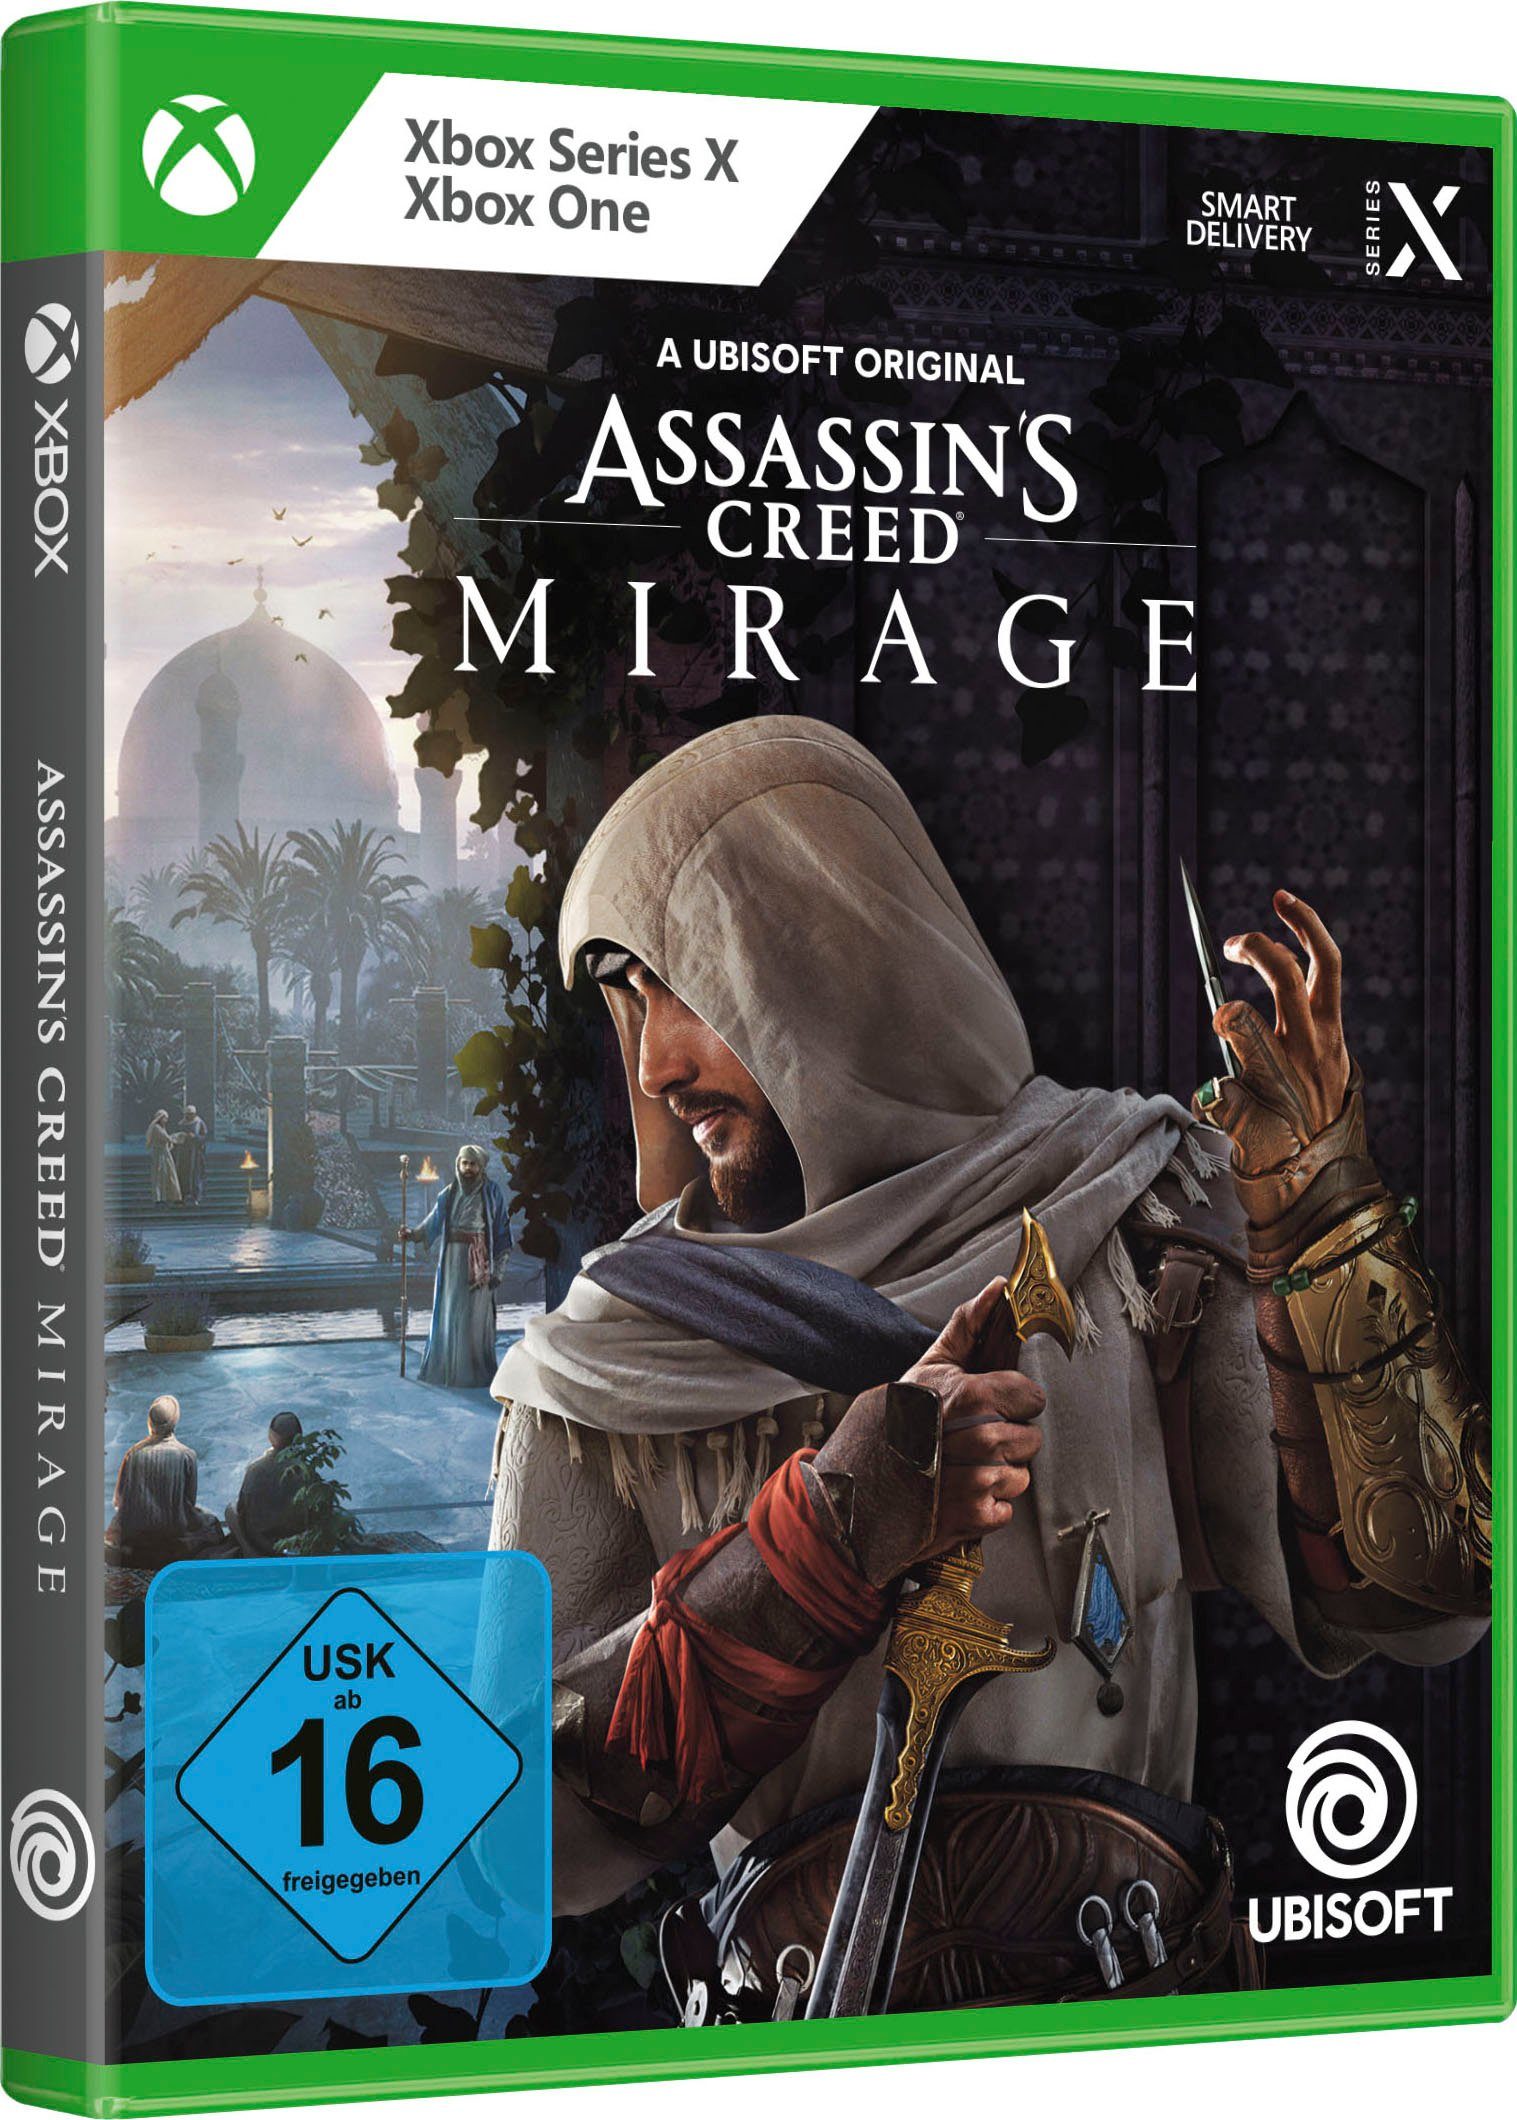 UBISOFT One, Xbox Xbox Creed Assassin's Mirage X Series